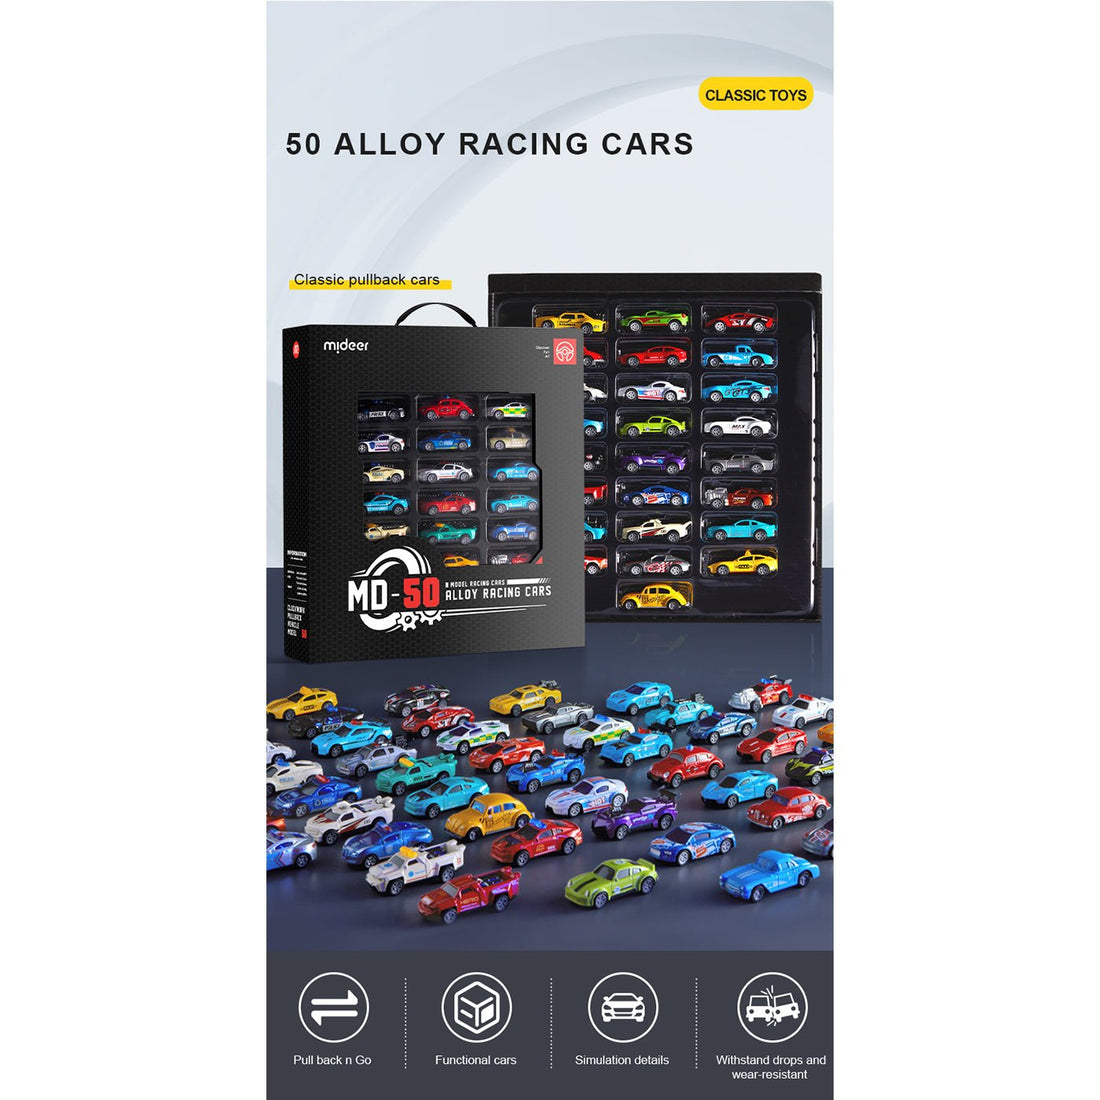 Alloy Classic Pullback Racing Cars 50pcs - 0cm